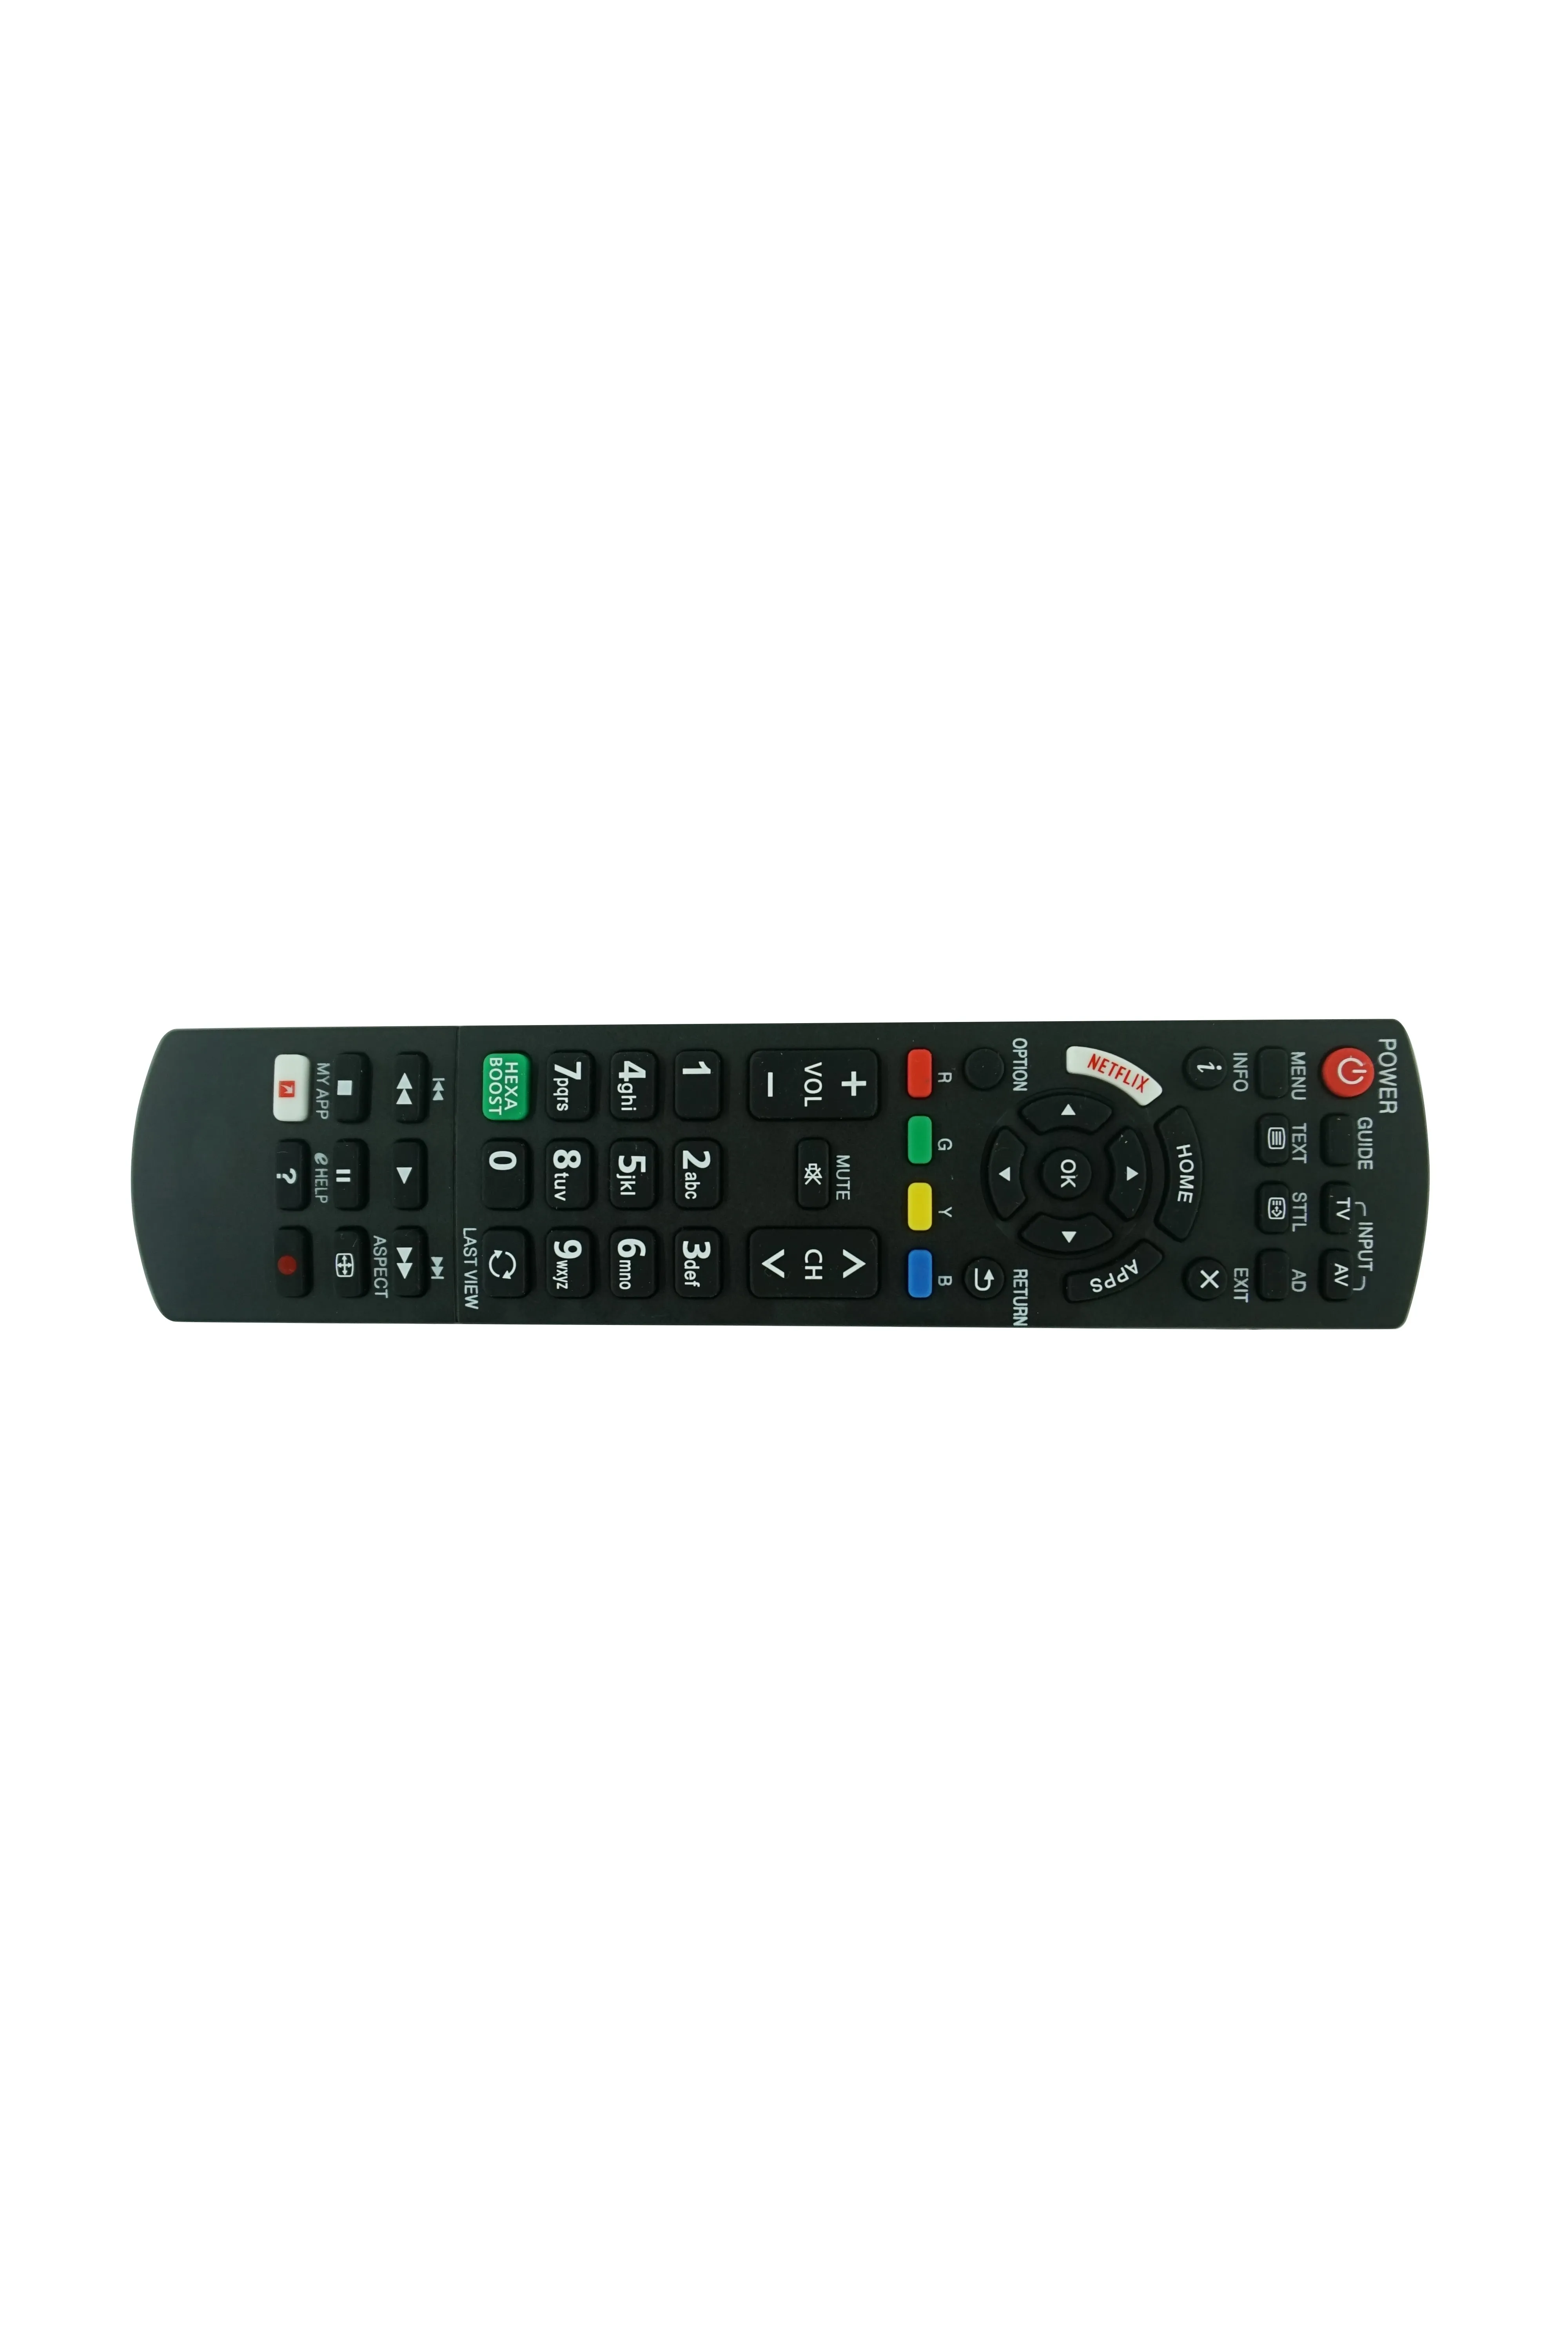 Telecomando per Panasonic TH-49GX740H TH-49GX740Z TH-40GX700H TH-43GX750D TH-43GX750W TH-43GX800H TH-49GX740H TH-49GX750W Smart UHD 4K OLED HDTV TV